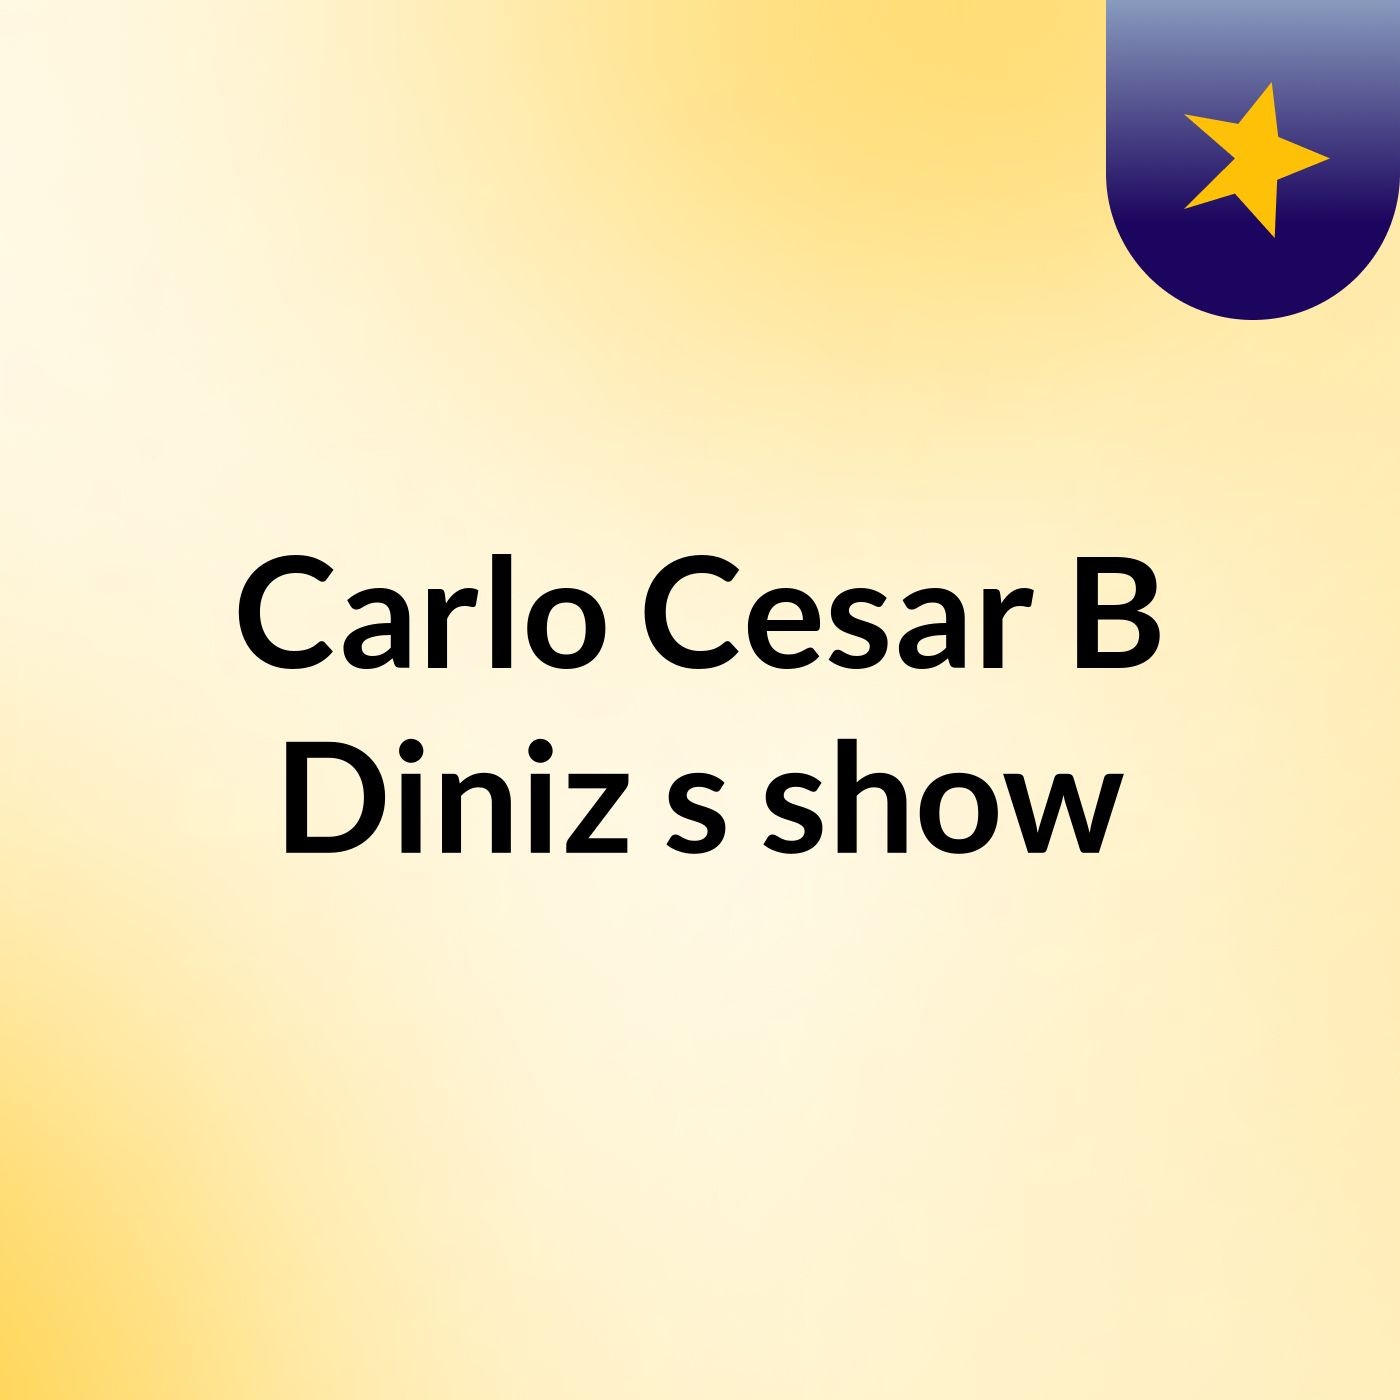 Carlo Cesar B Diniz's show